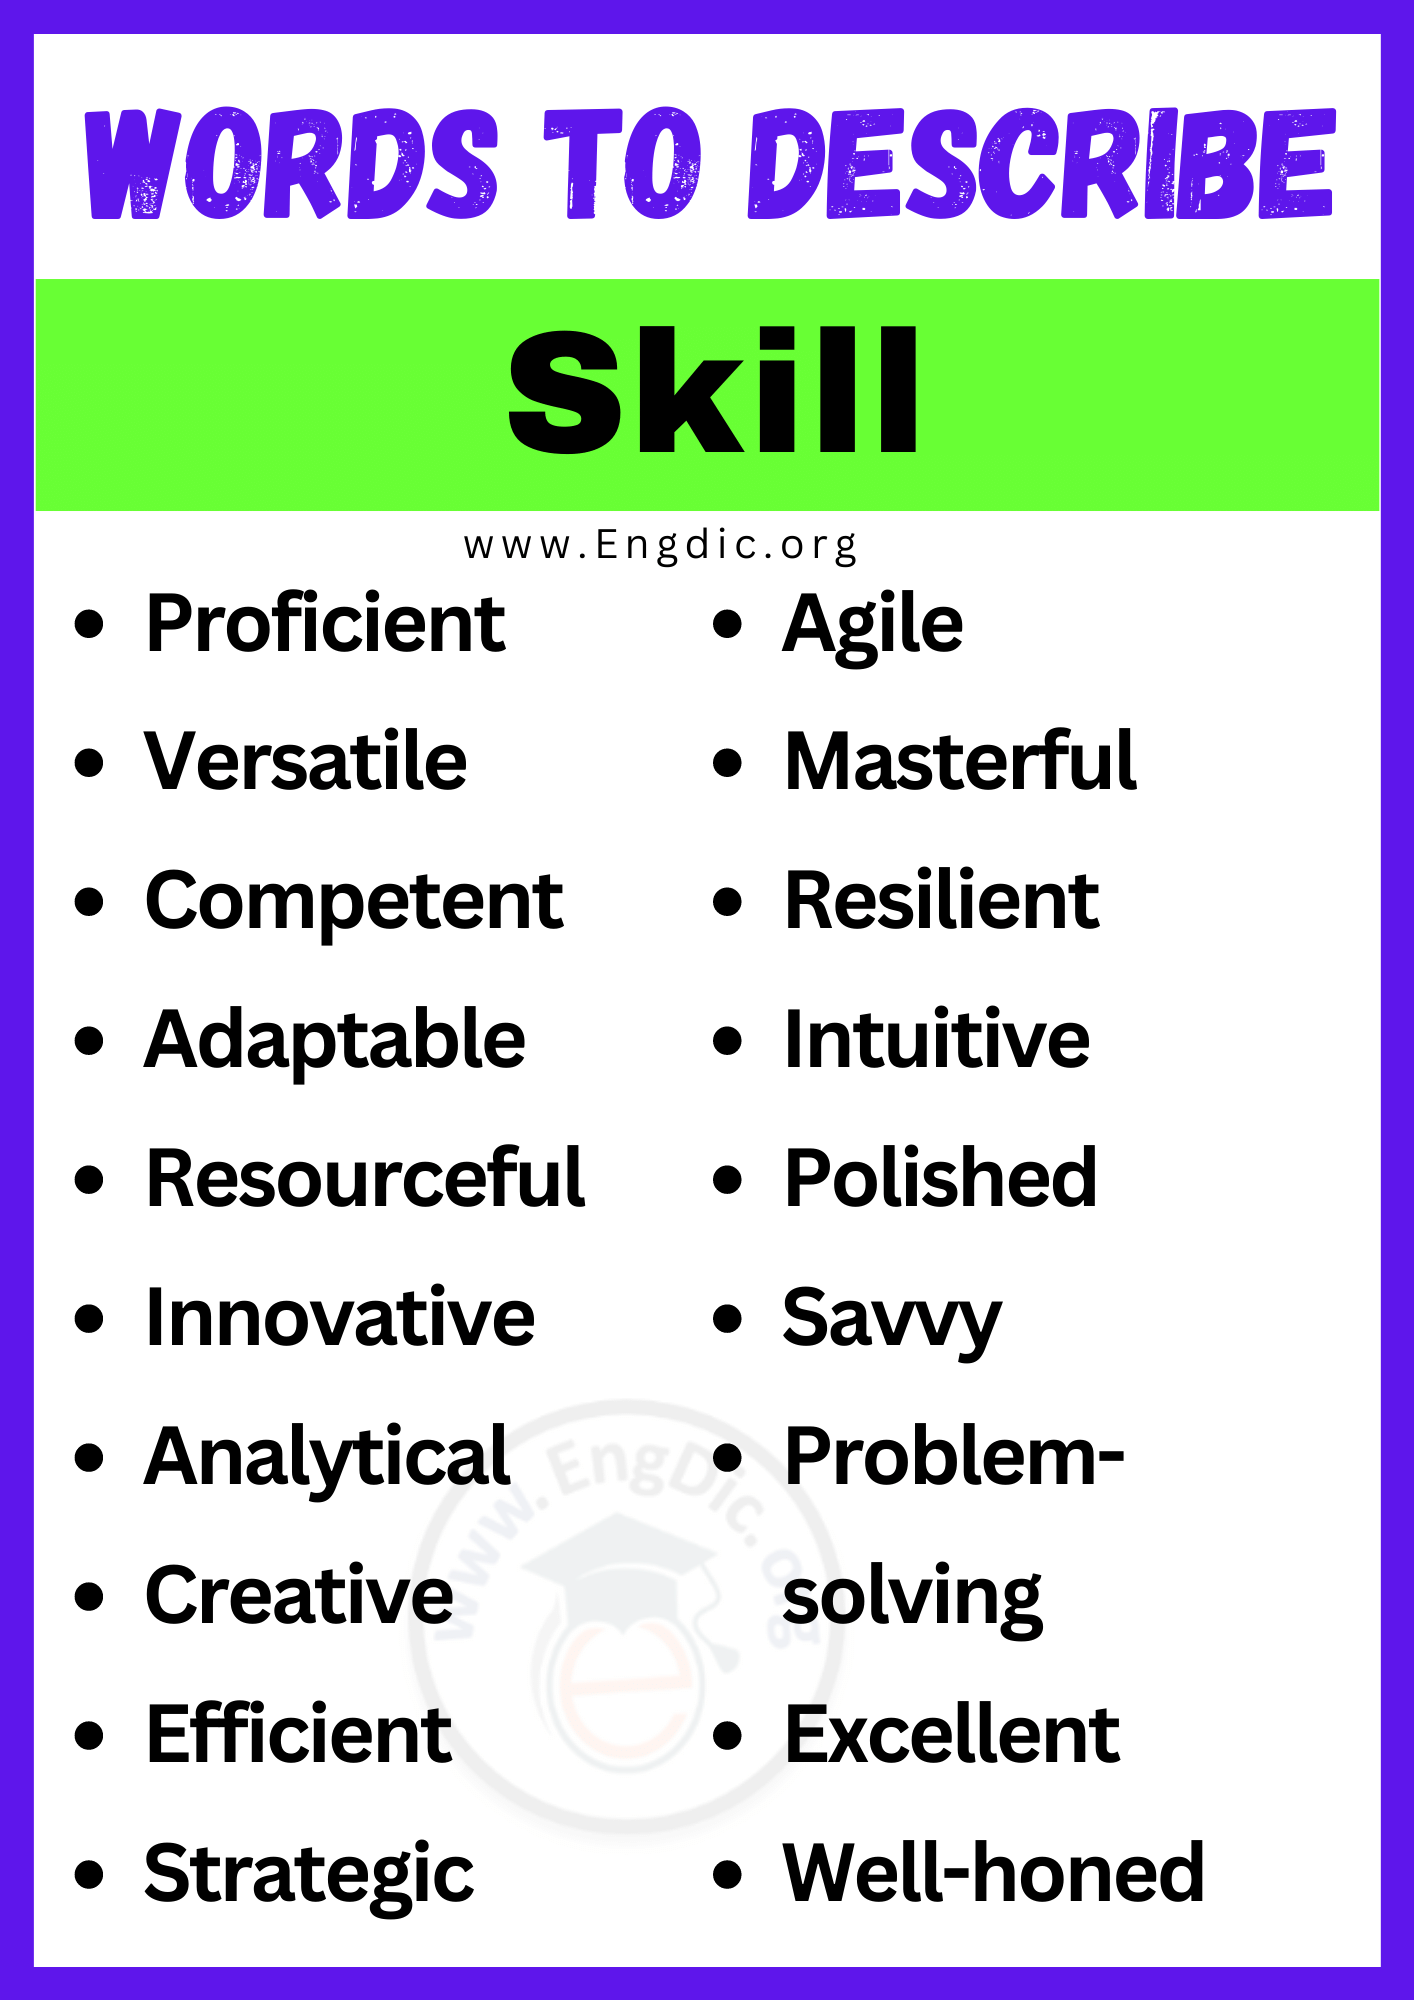 Words to Describe Skill